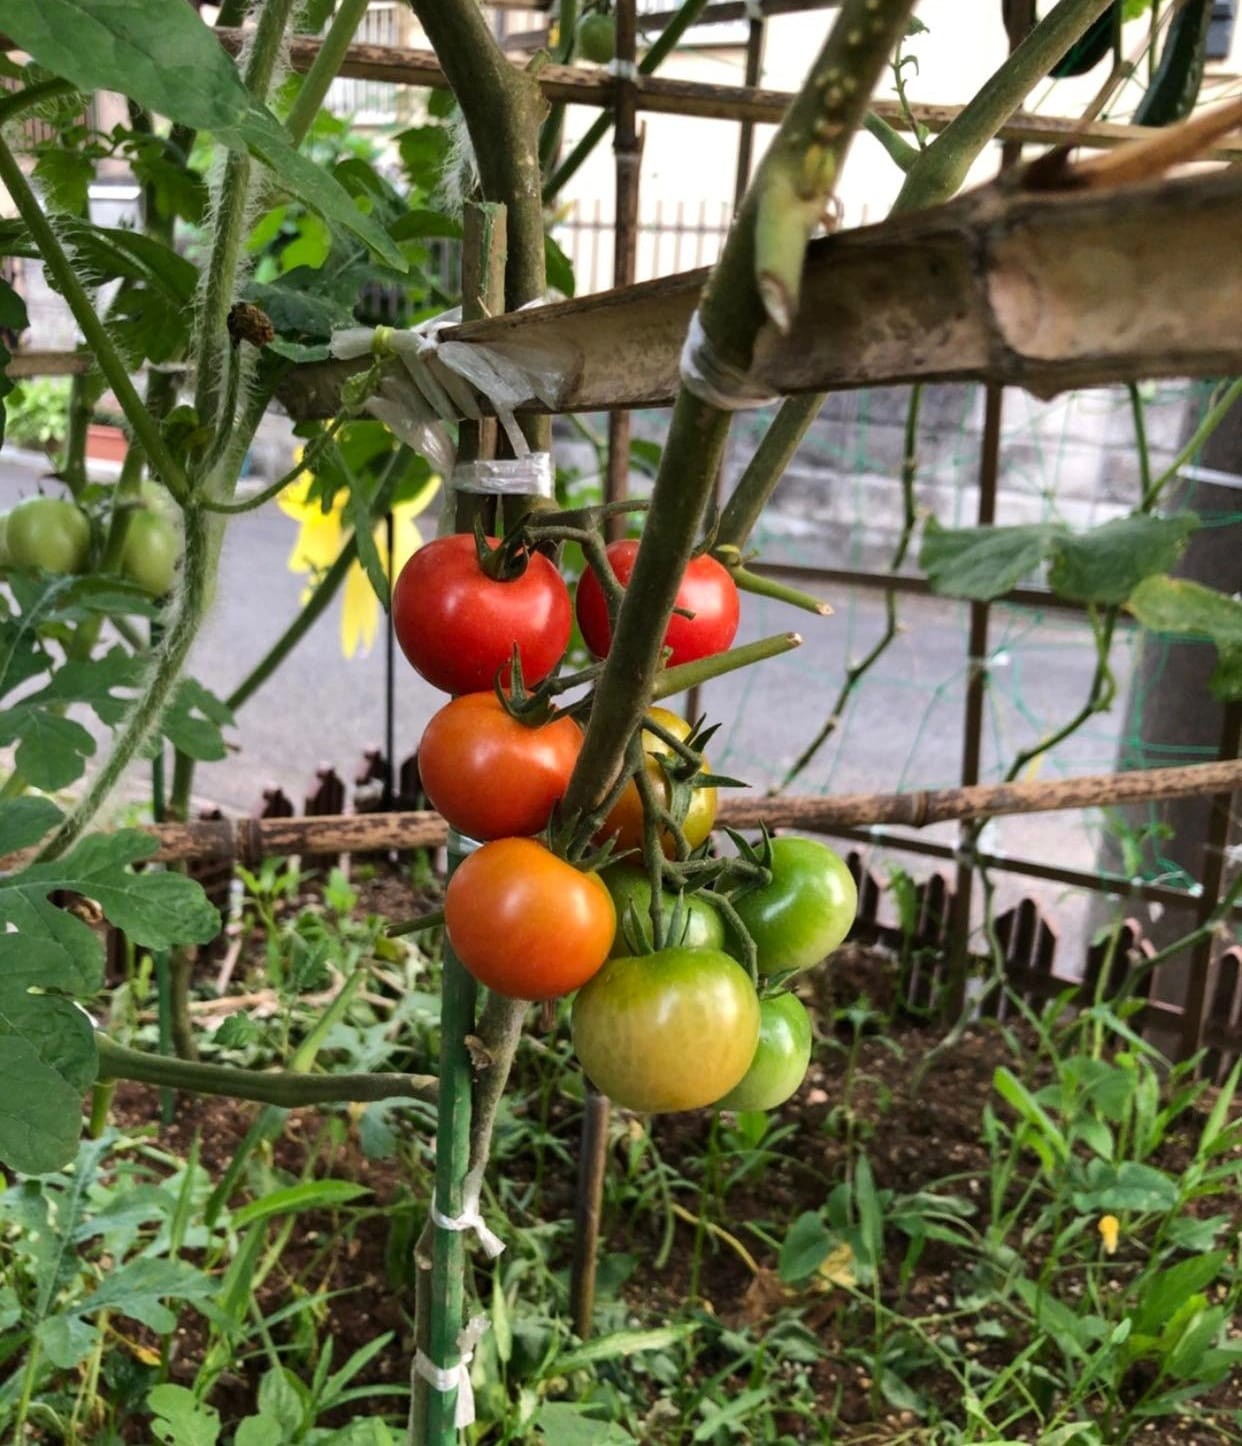 The riped tomatoes in Nguyen Luan's garden. Photo: Nguyen Luan 